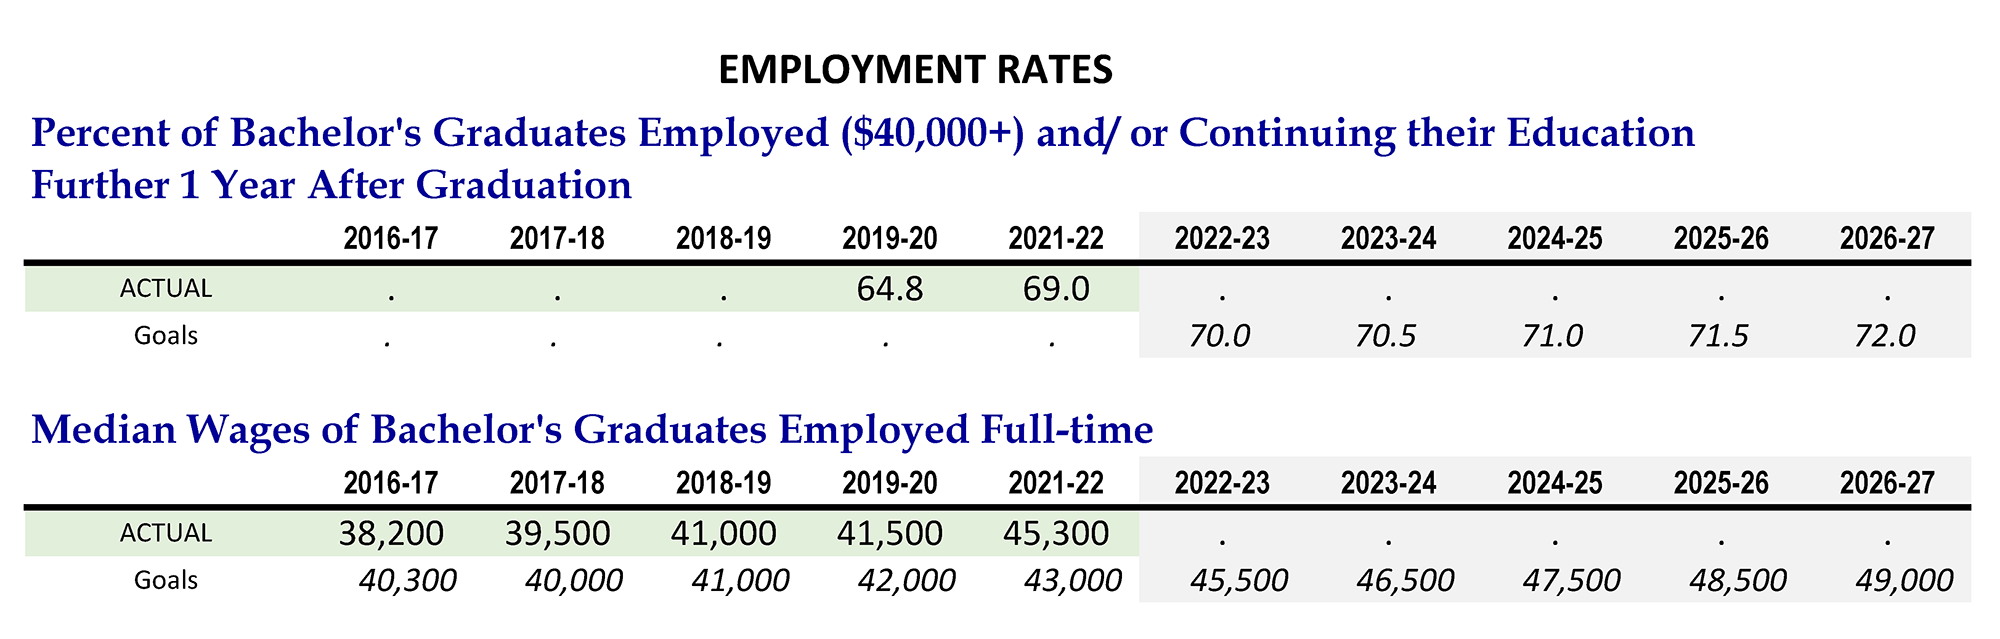 Employment Rates